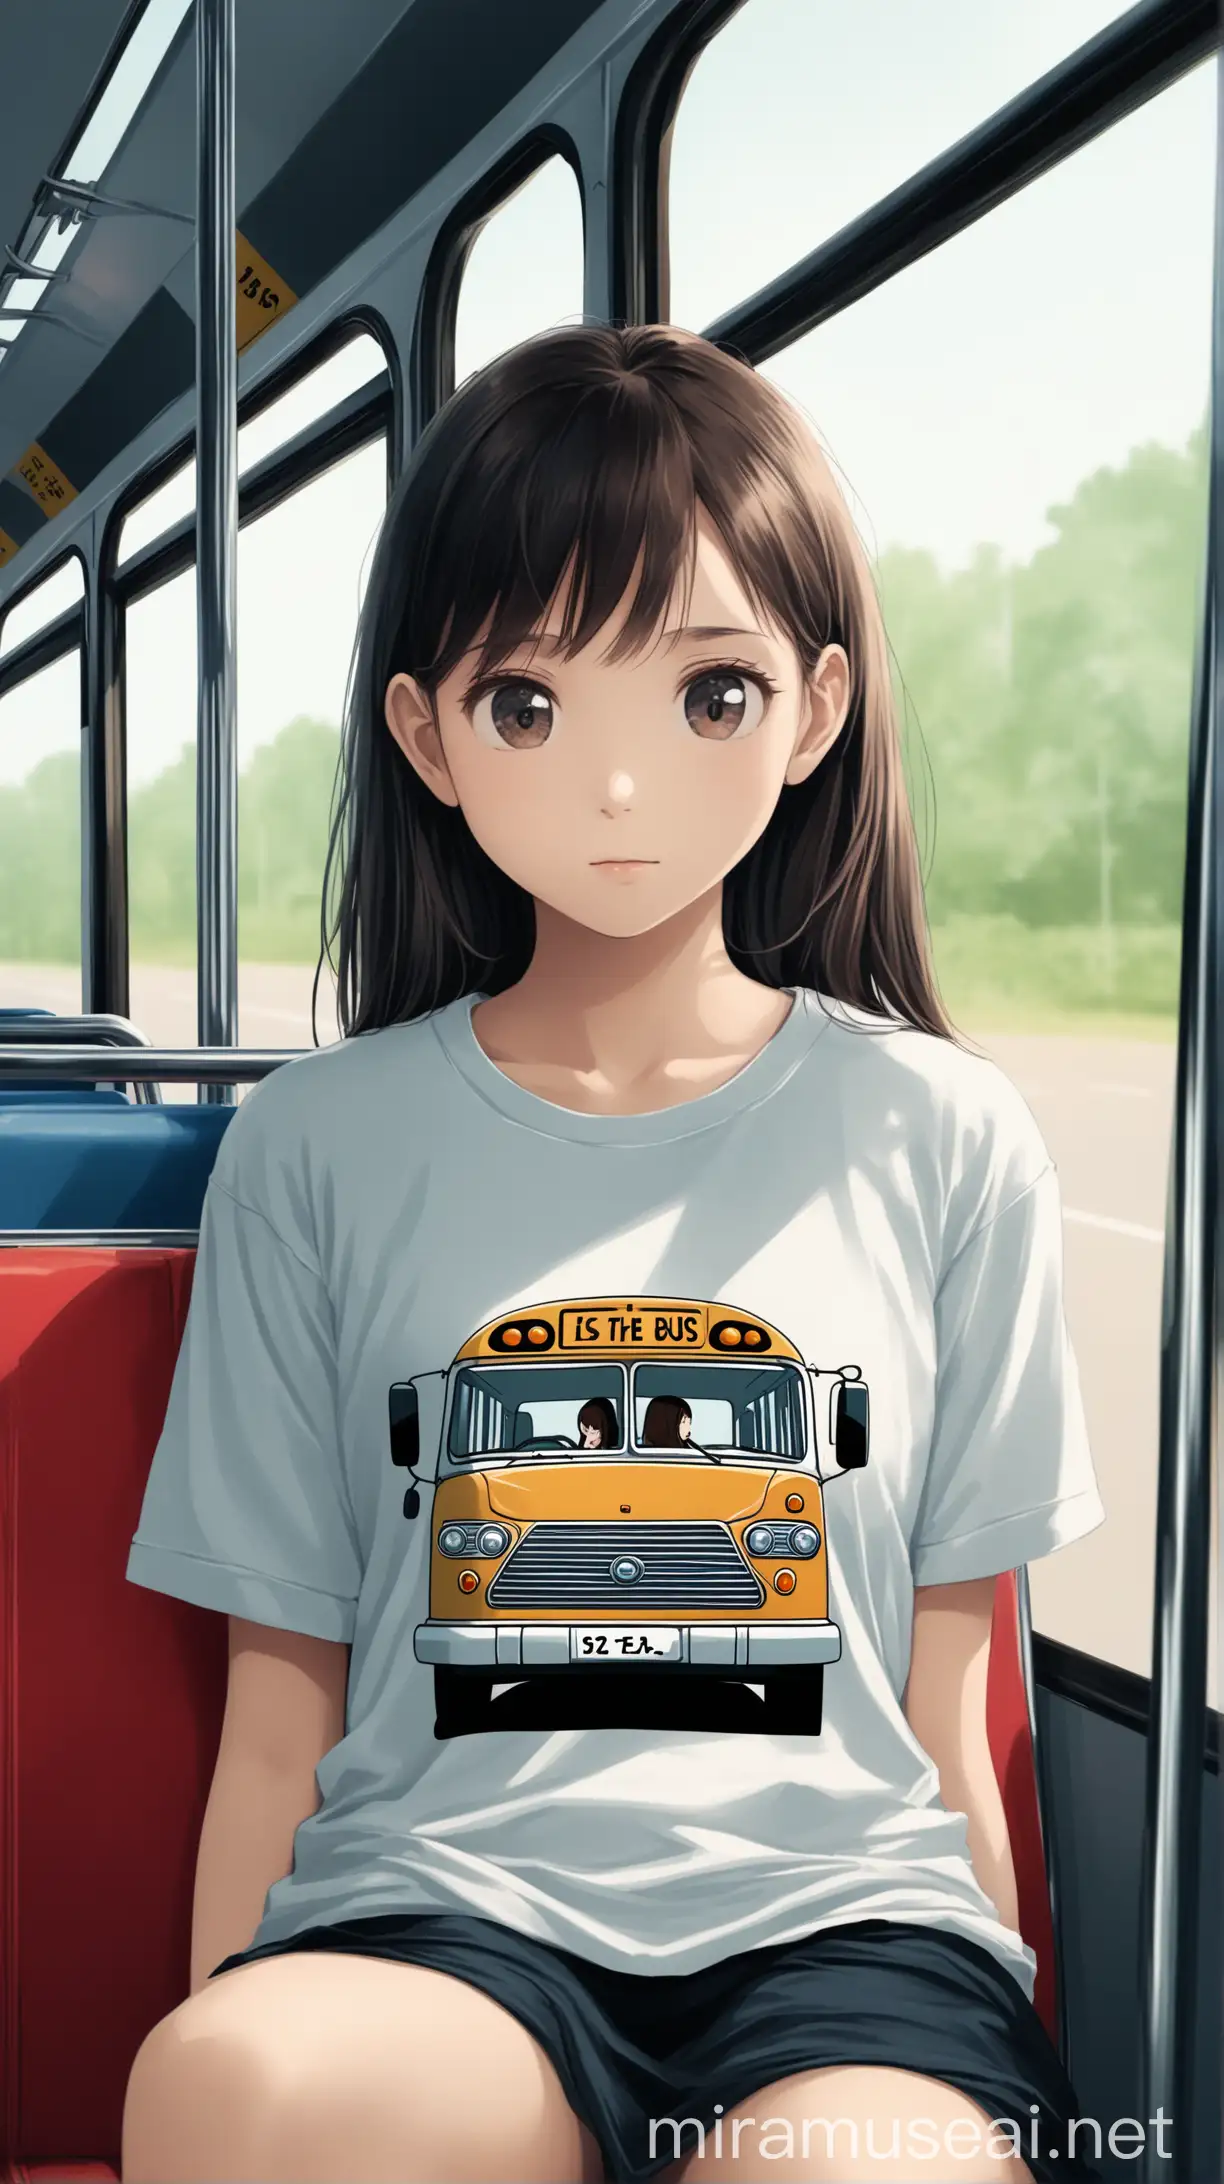 Girl Wearing Car Design TShirt on Bus Ride